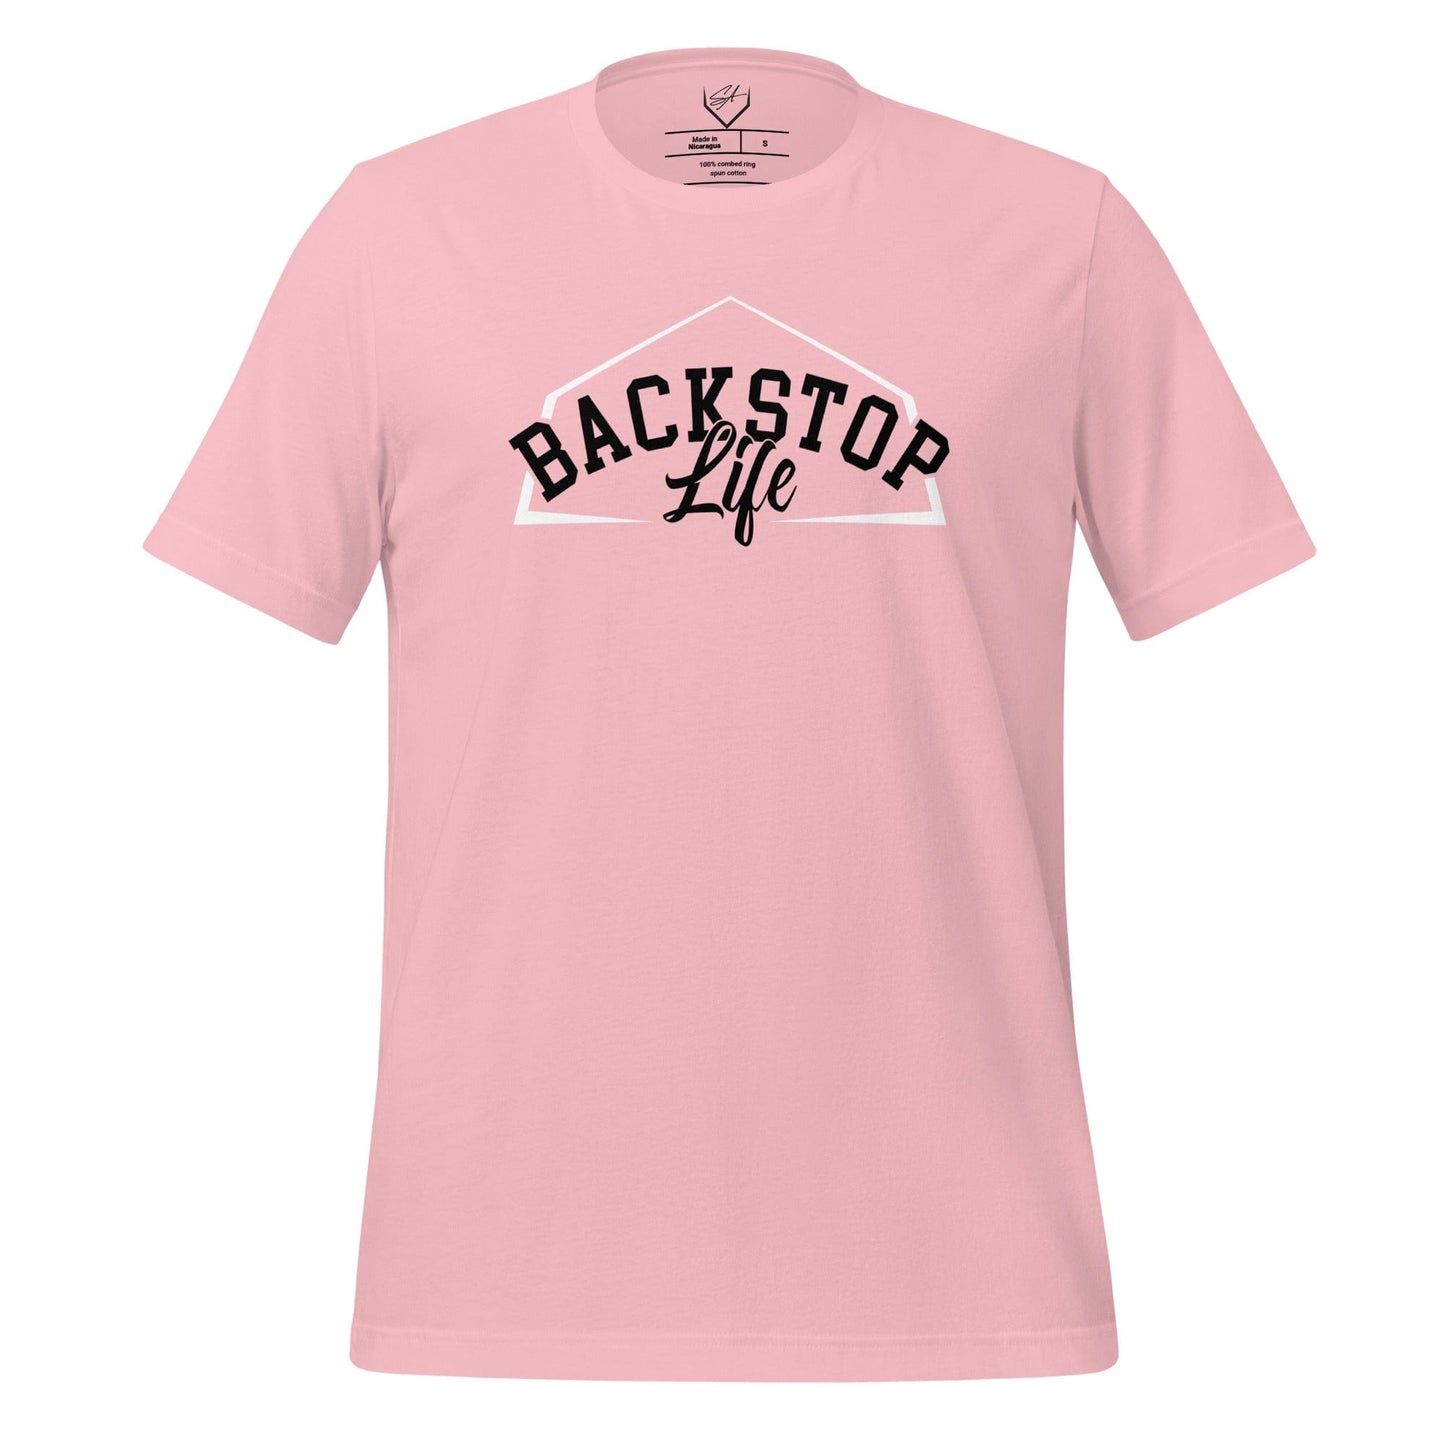 Backstop Life - Adult Tee